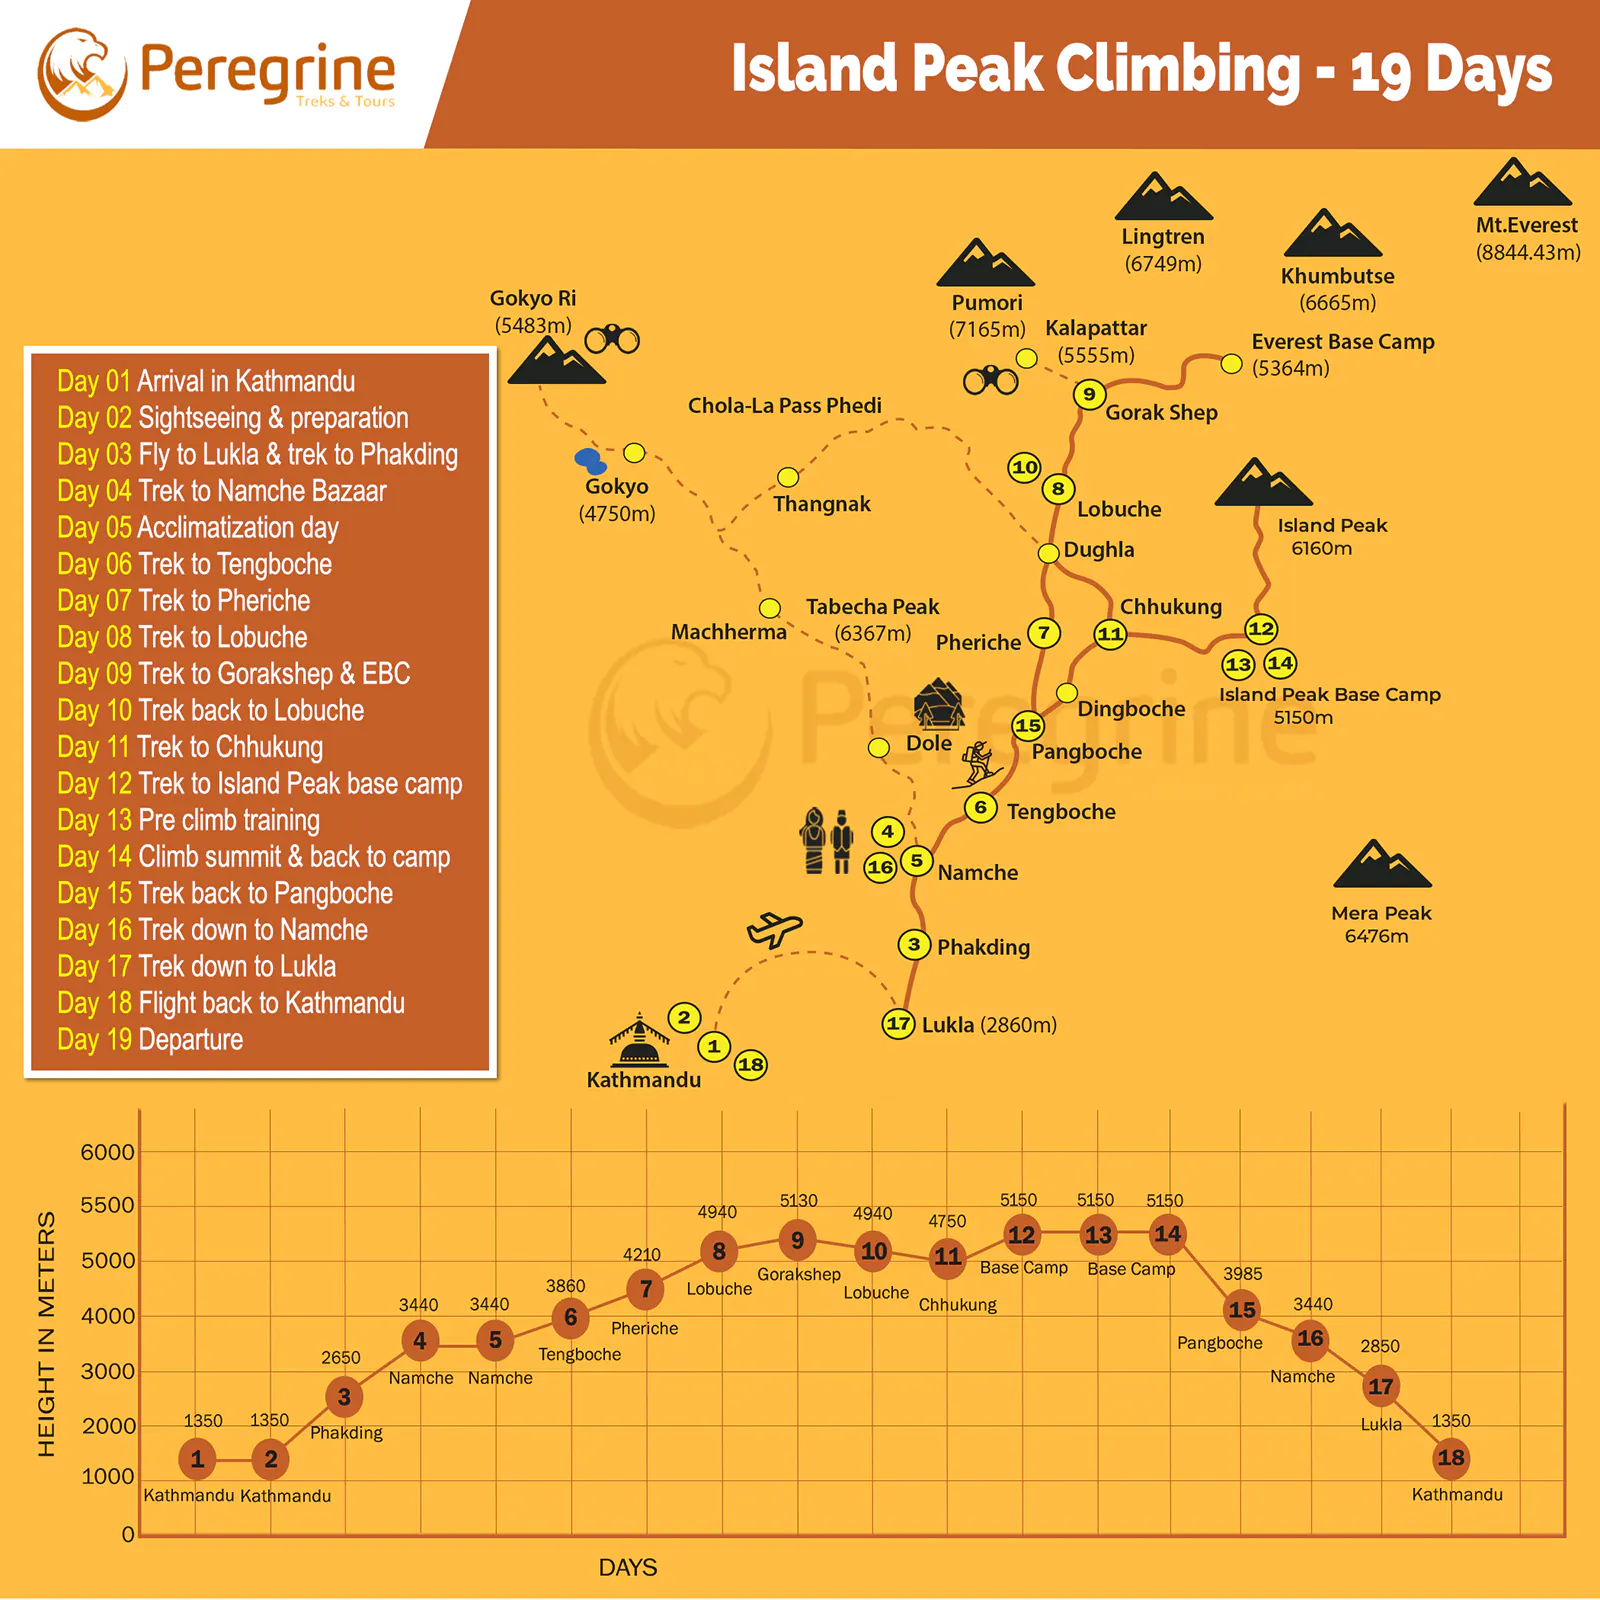 Island Peak Climbing